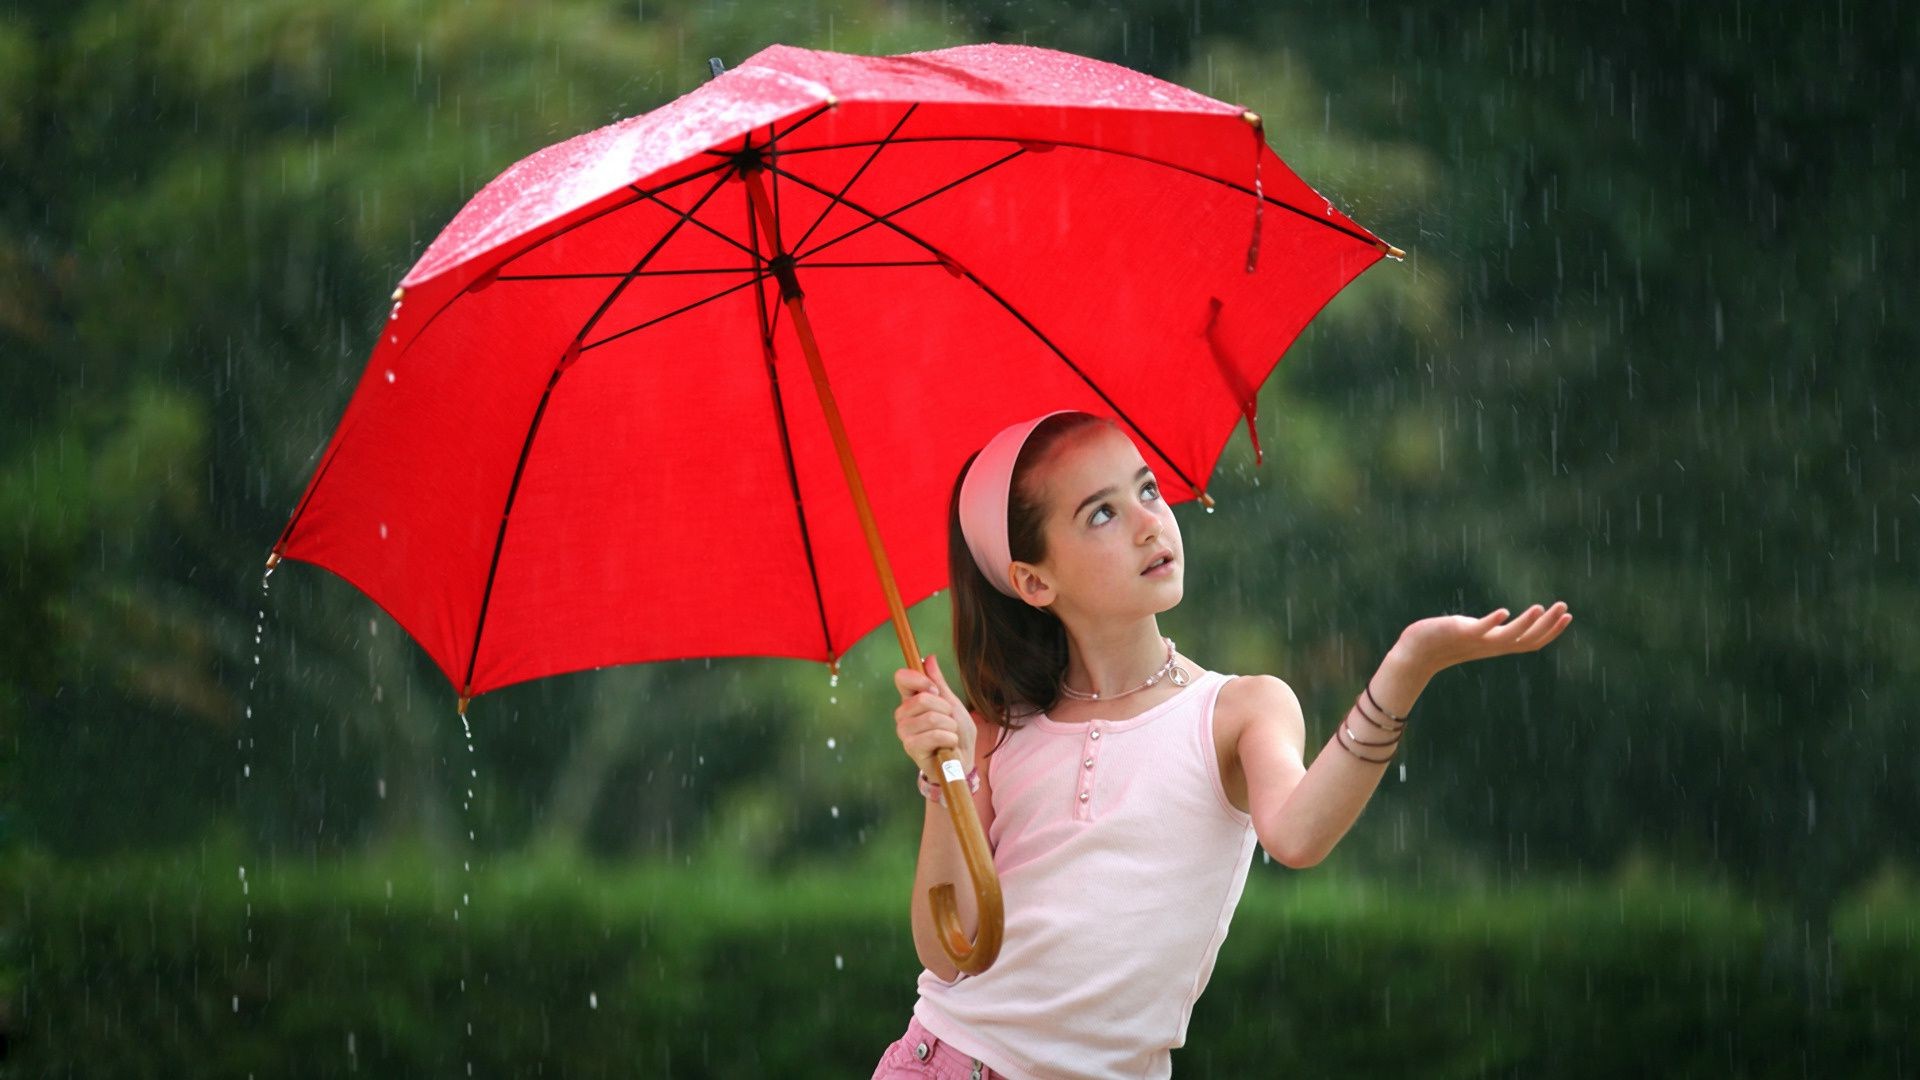 children umbrella girl rain woman outdoors nature summer grass one fun leisure park child portrait